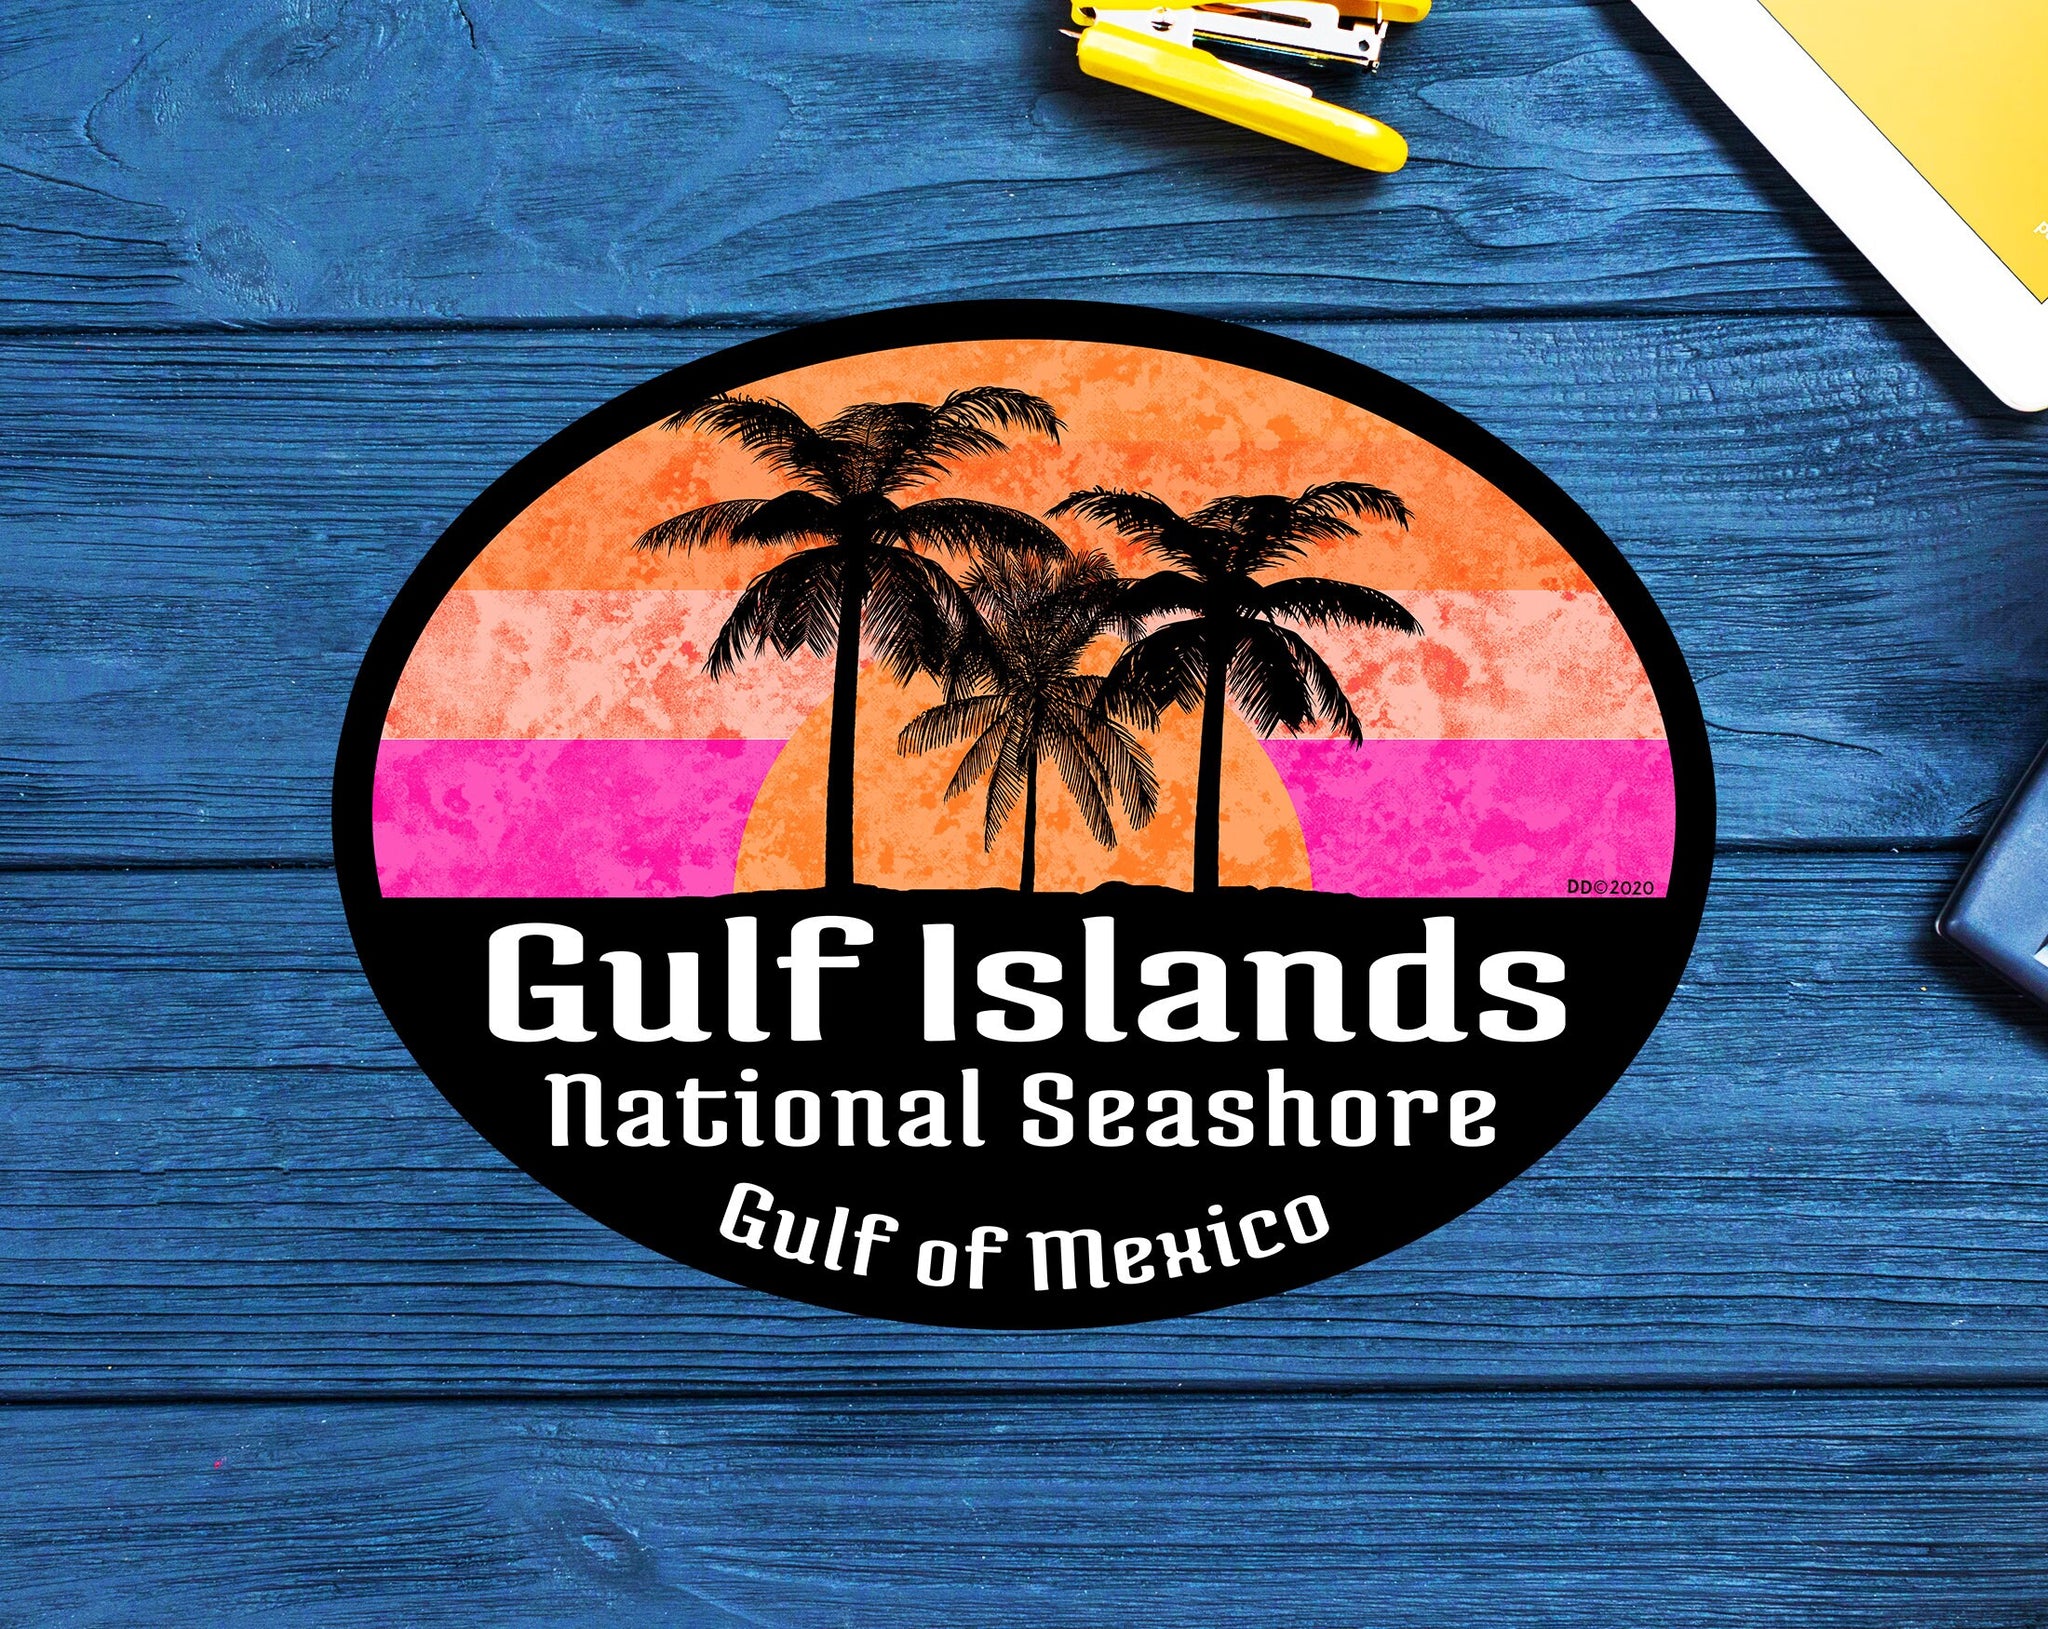 Gulf Islands National Seashore Florida Alabama Mississippi Palm Tree Sticker Decal 3.75"